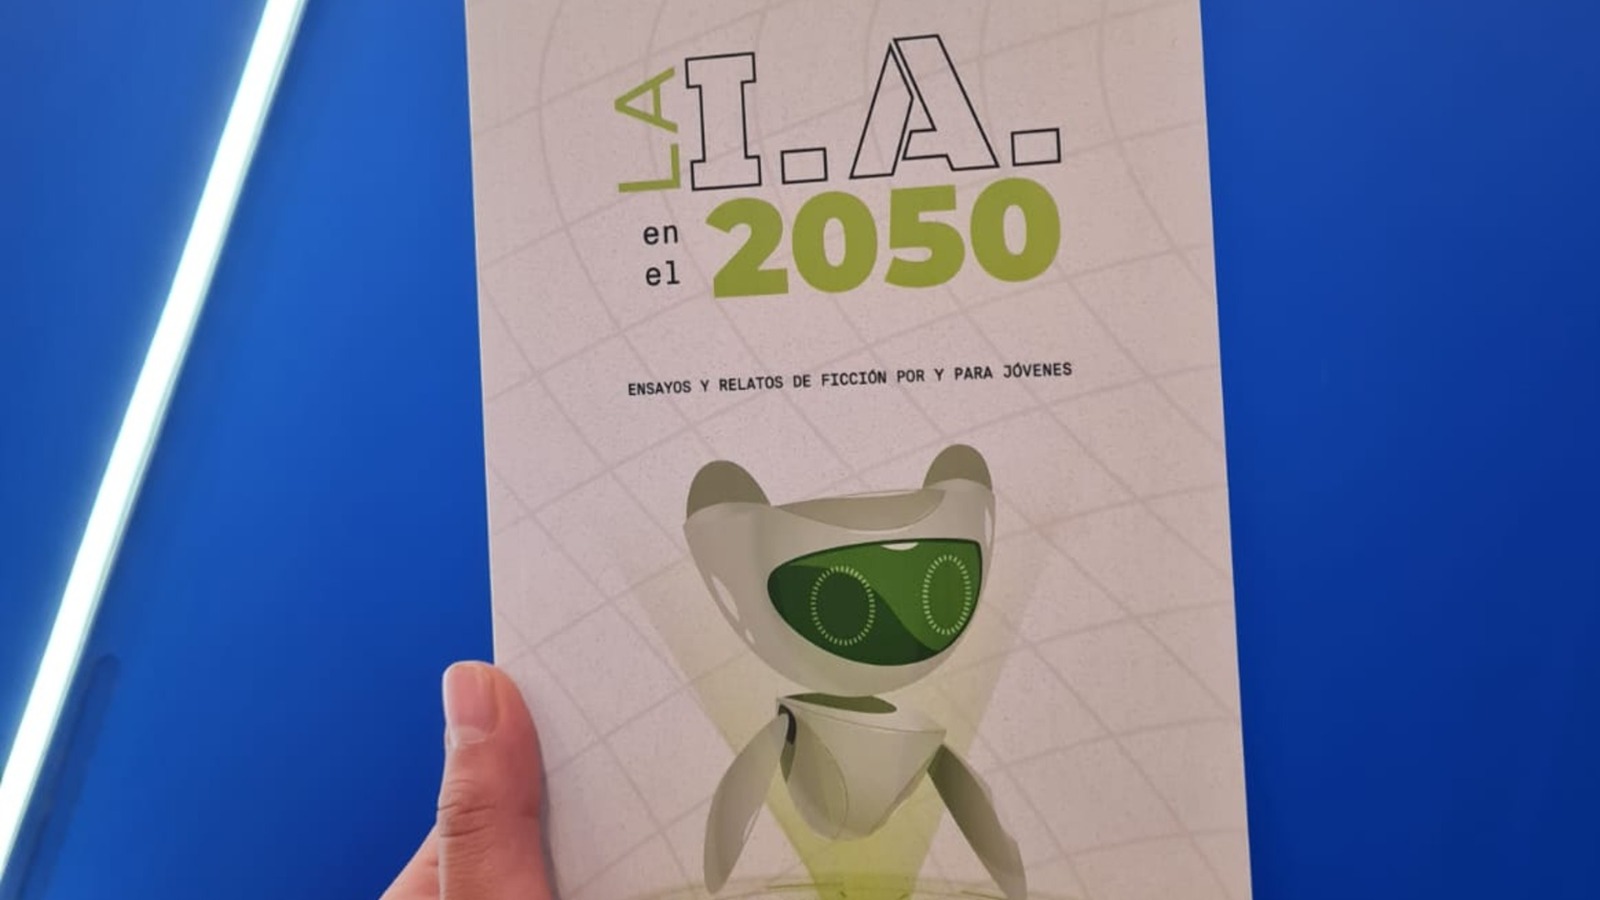 La I.A en el 2050